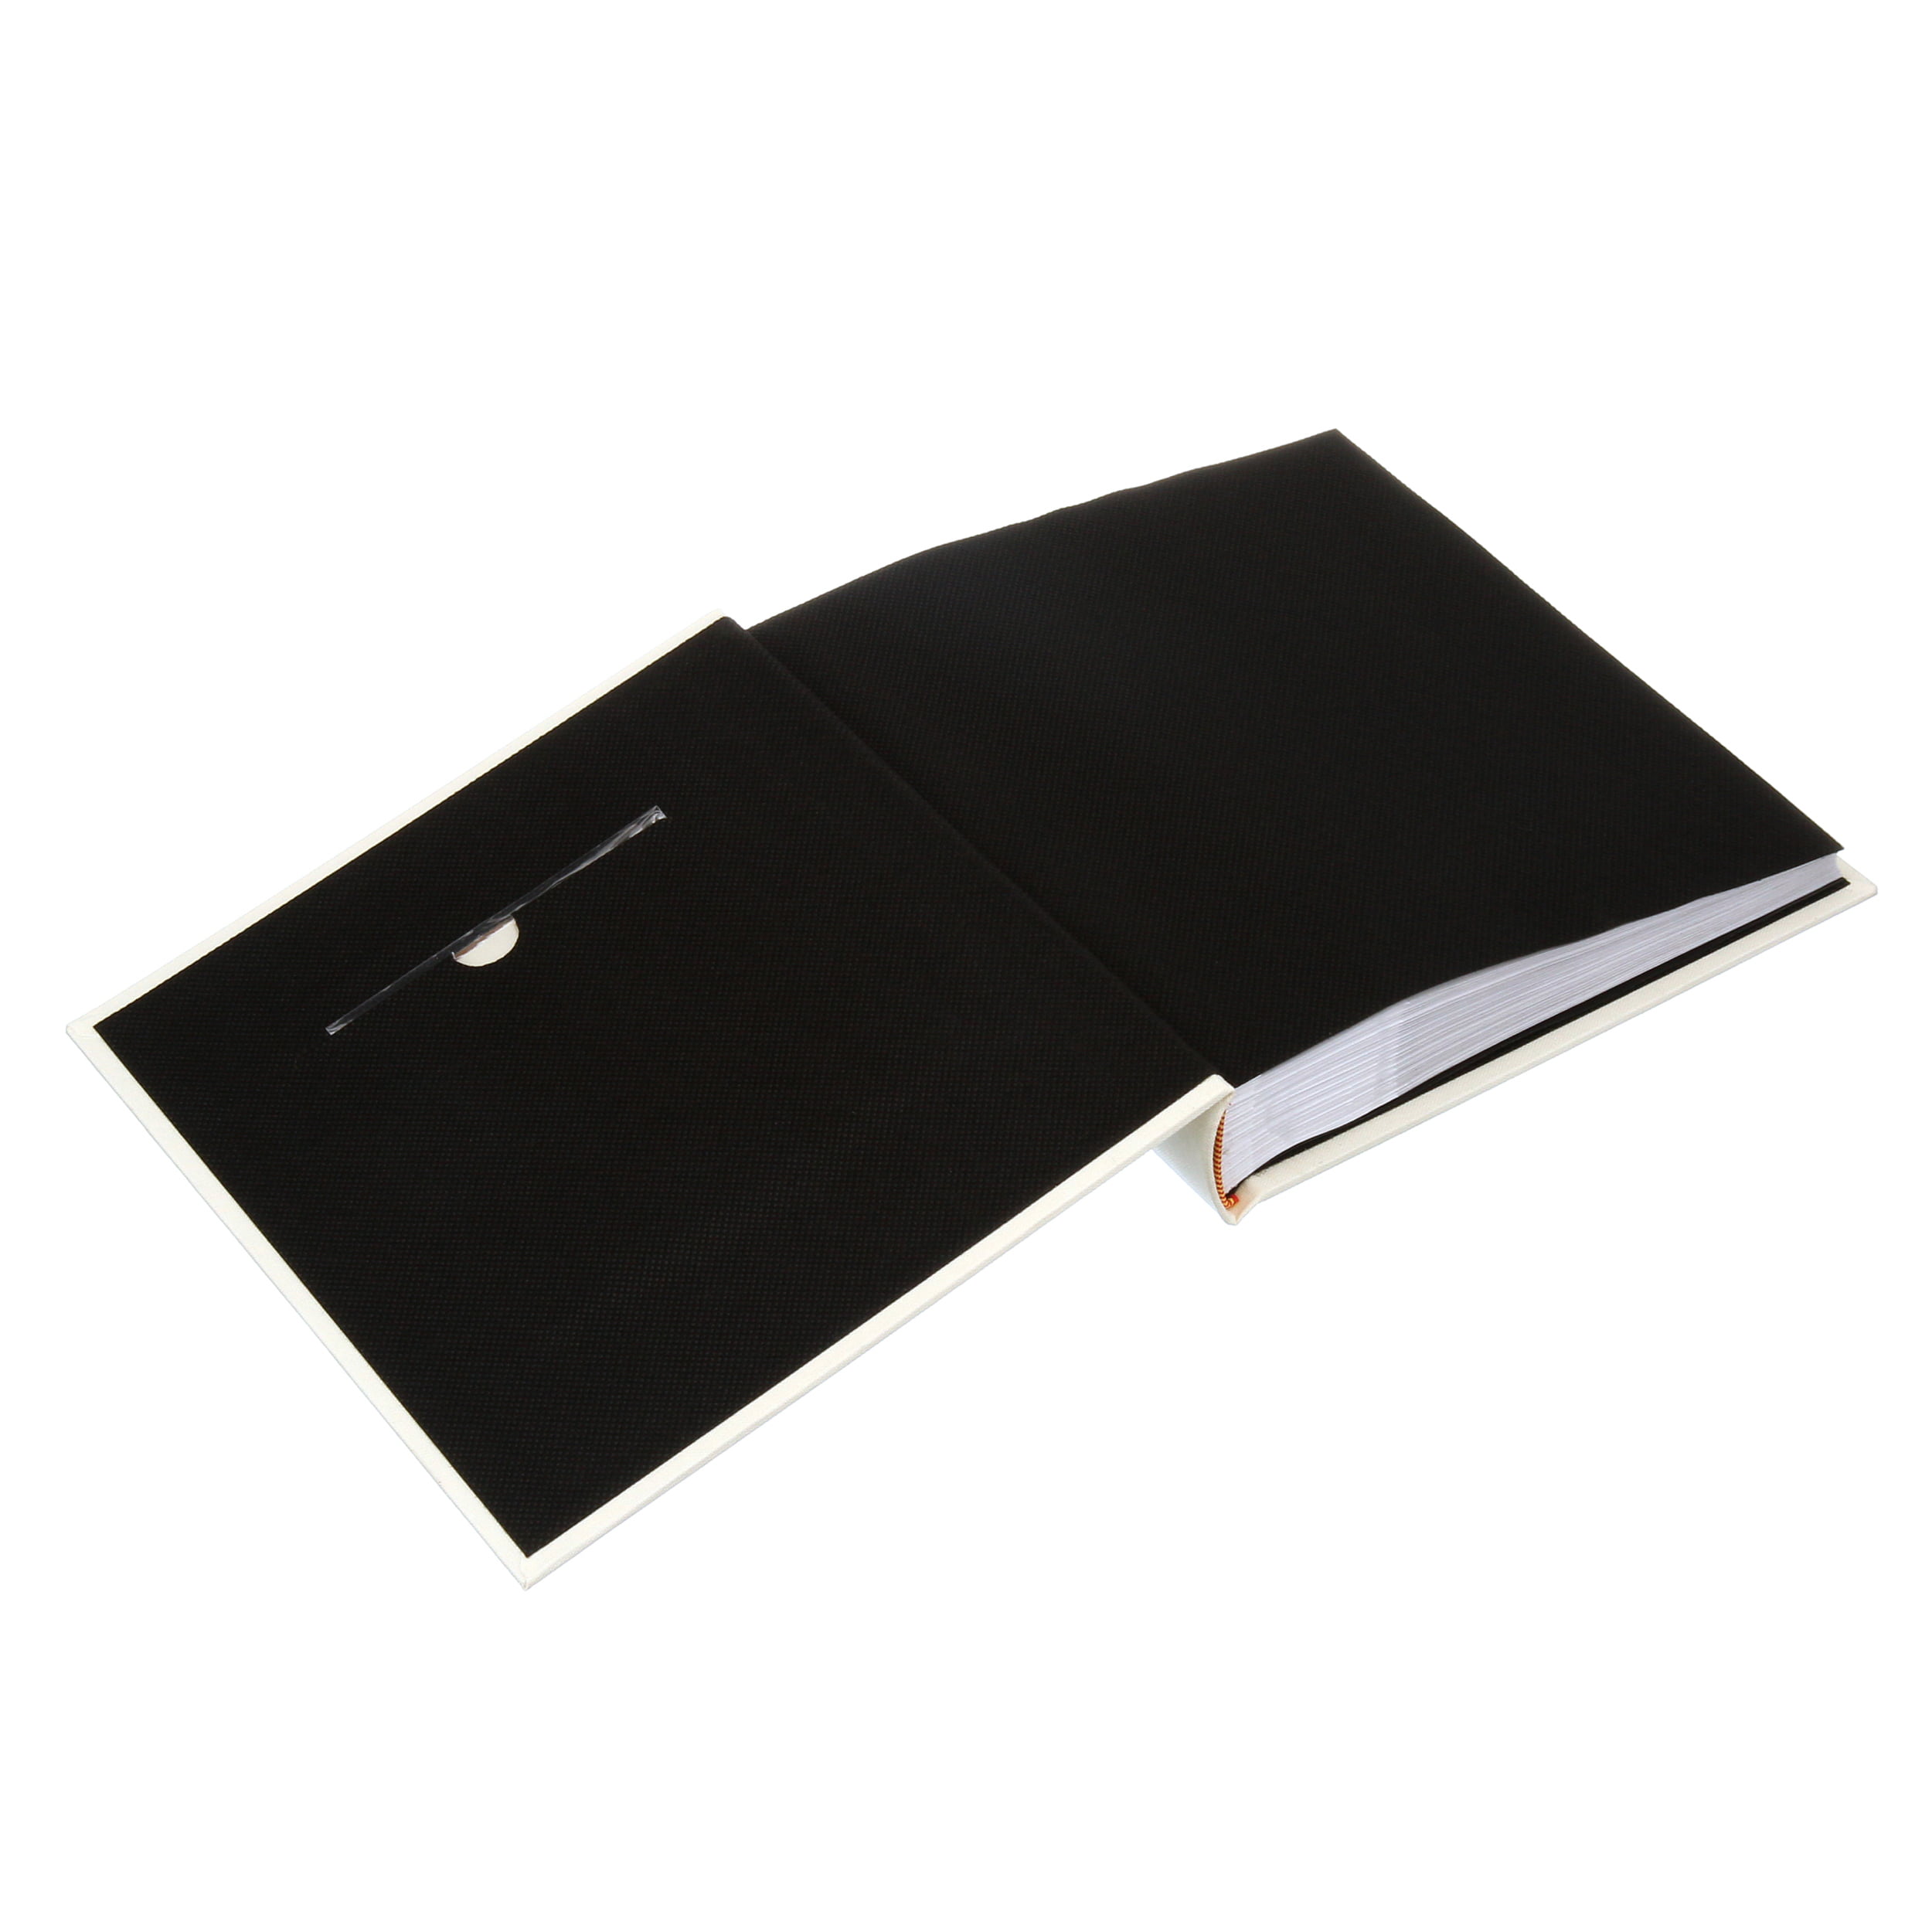 MSTONAL Black Linen 4x6 Photo Album 200 Pockets Slip-In Design Protects Photos